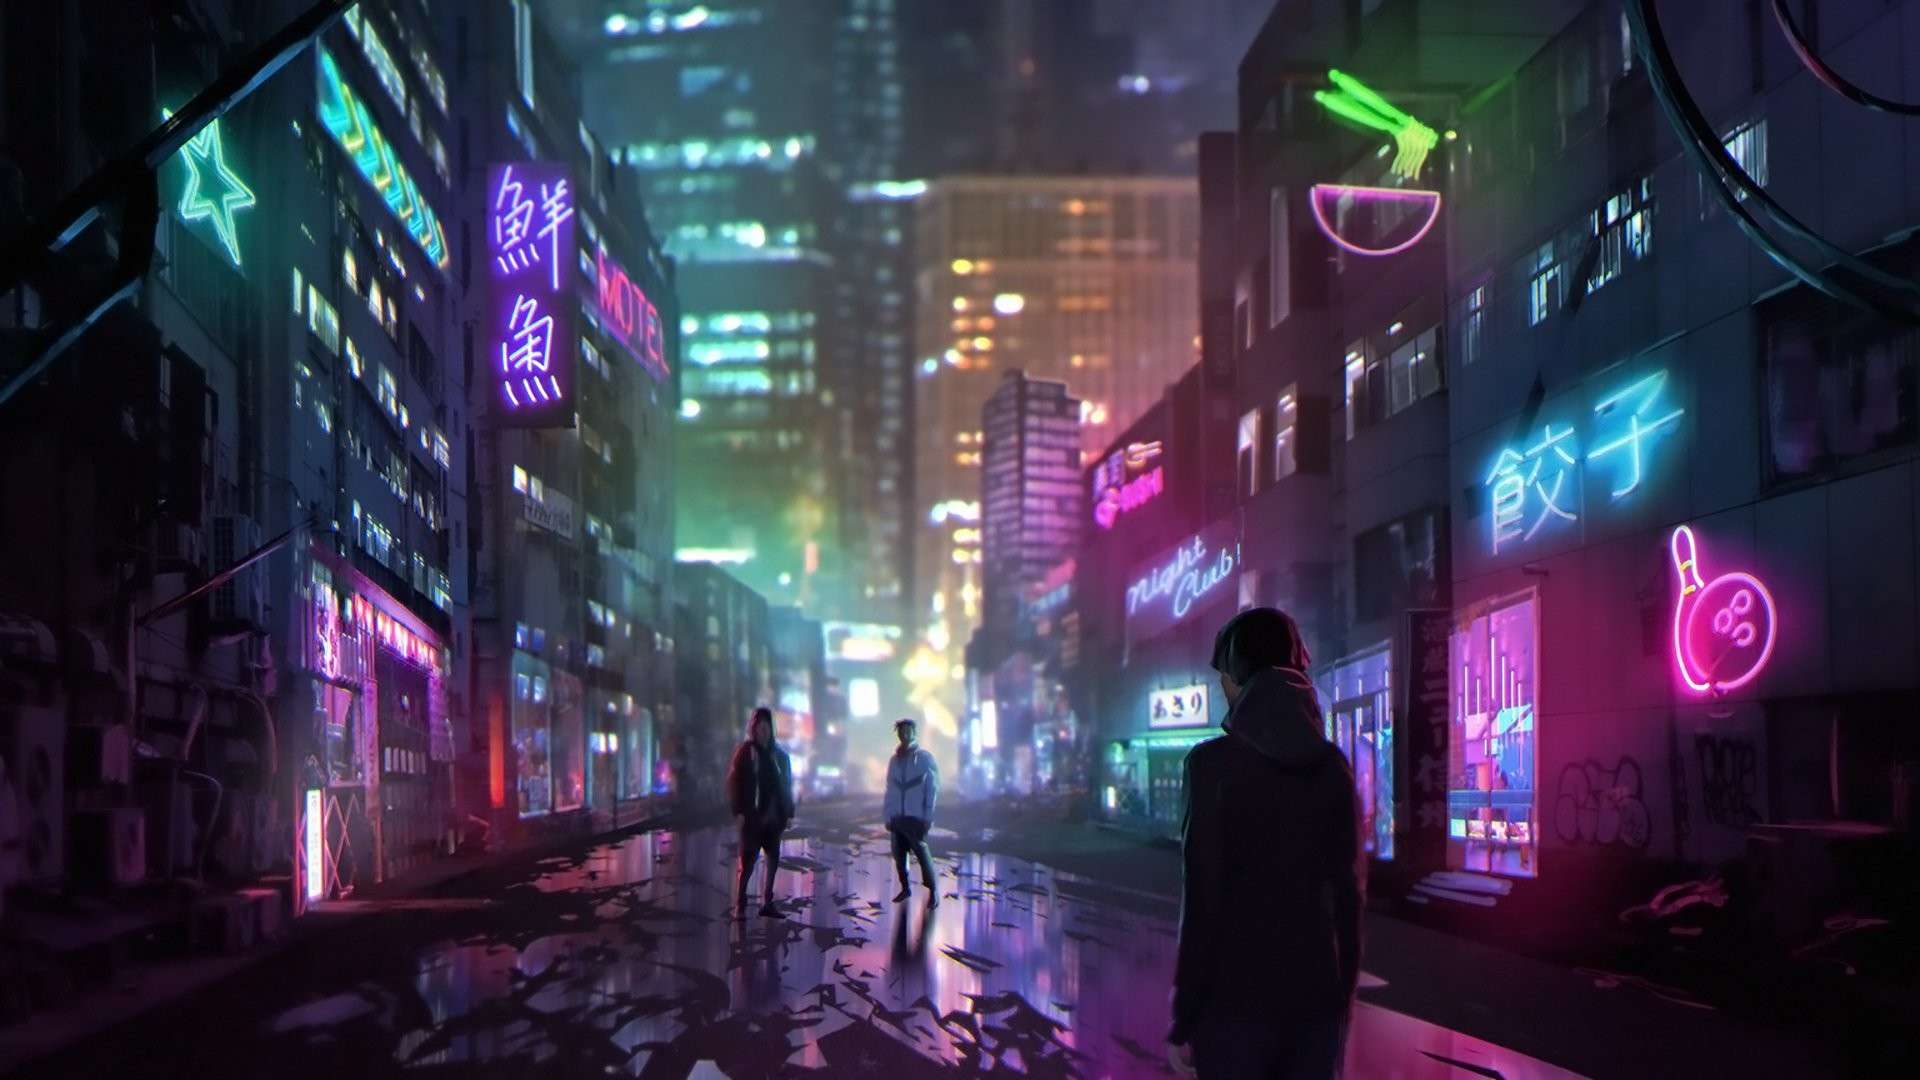 Cyberpunk Neon City Wallpapers - Top Free Cyberpunk Neon City ...